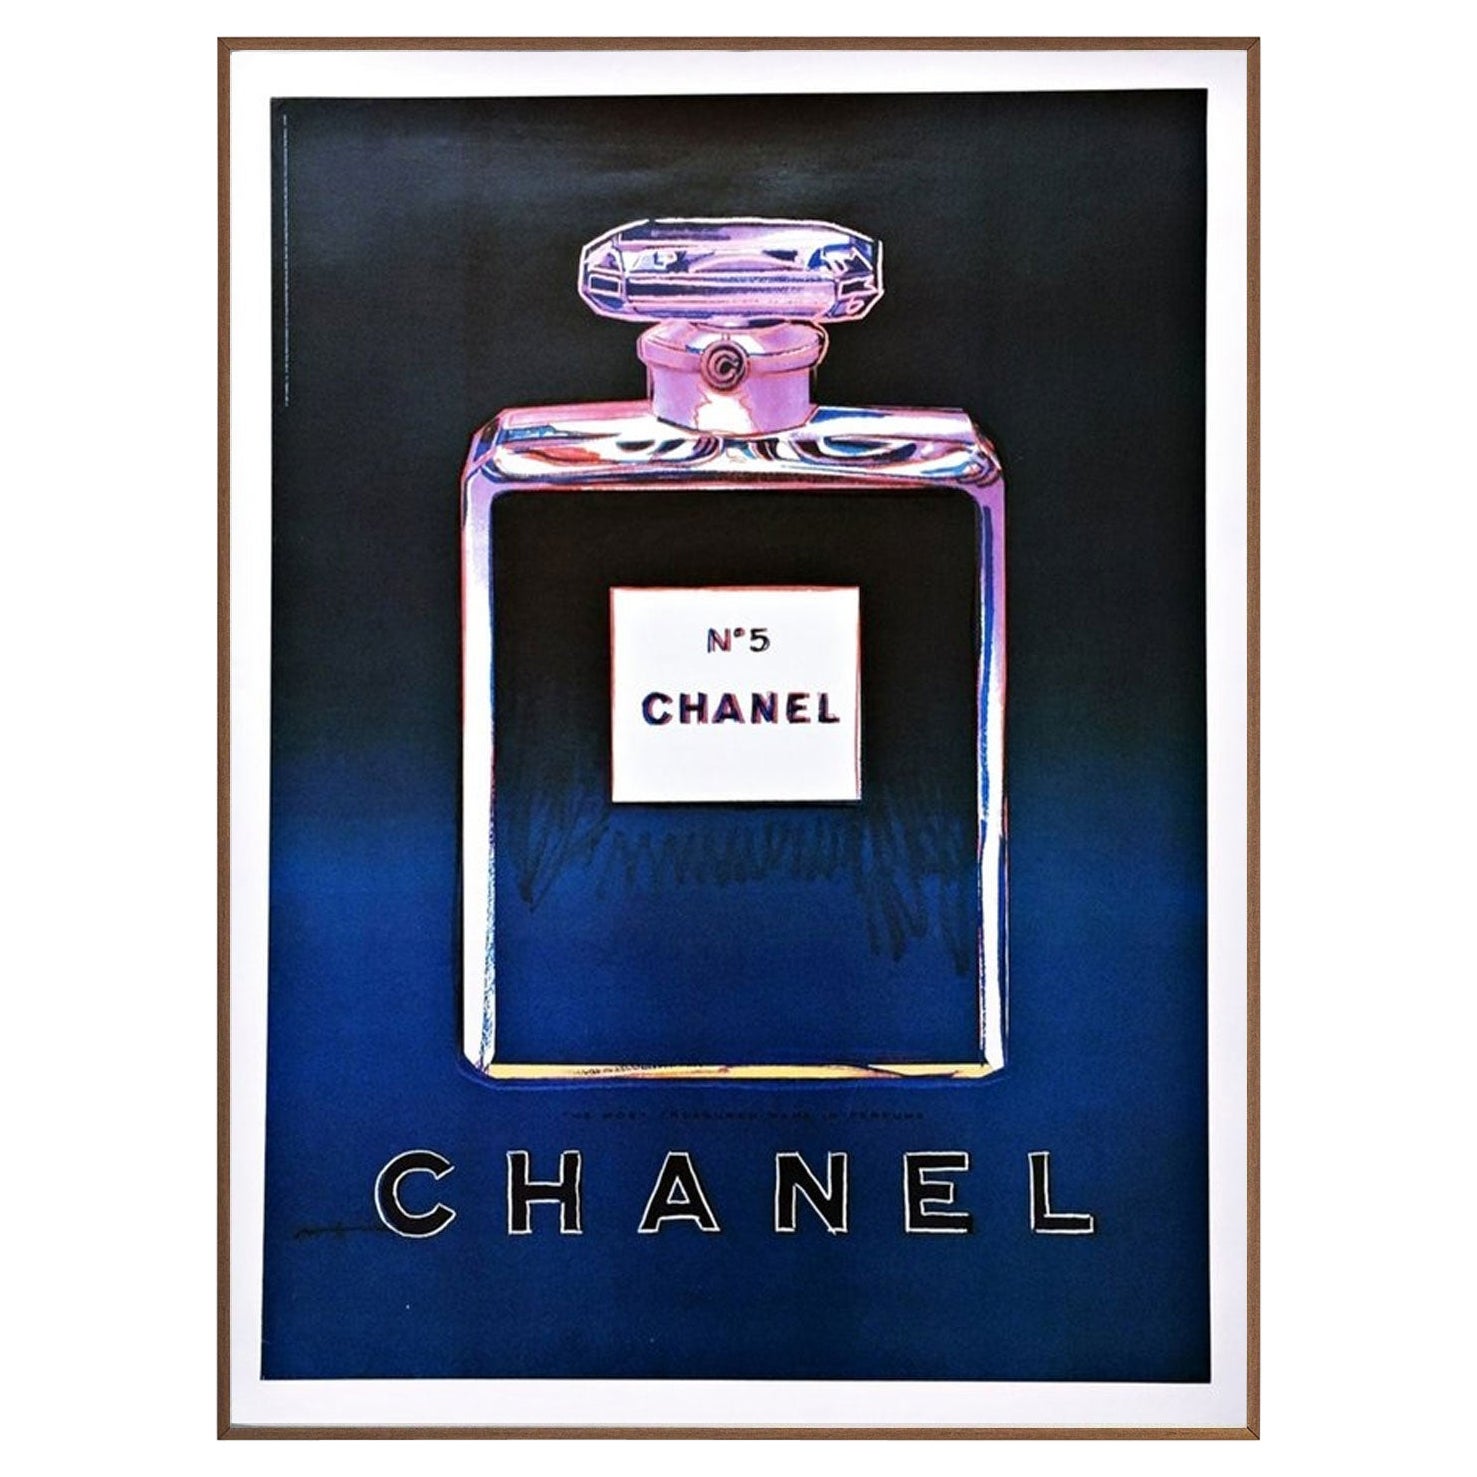 1997 Andy Warhol, Chanel Set of 4 Original Vintage Posters